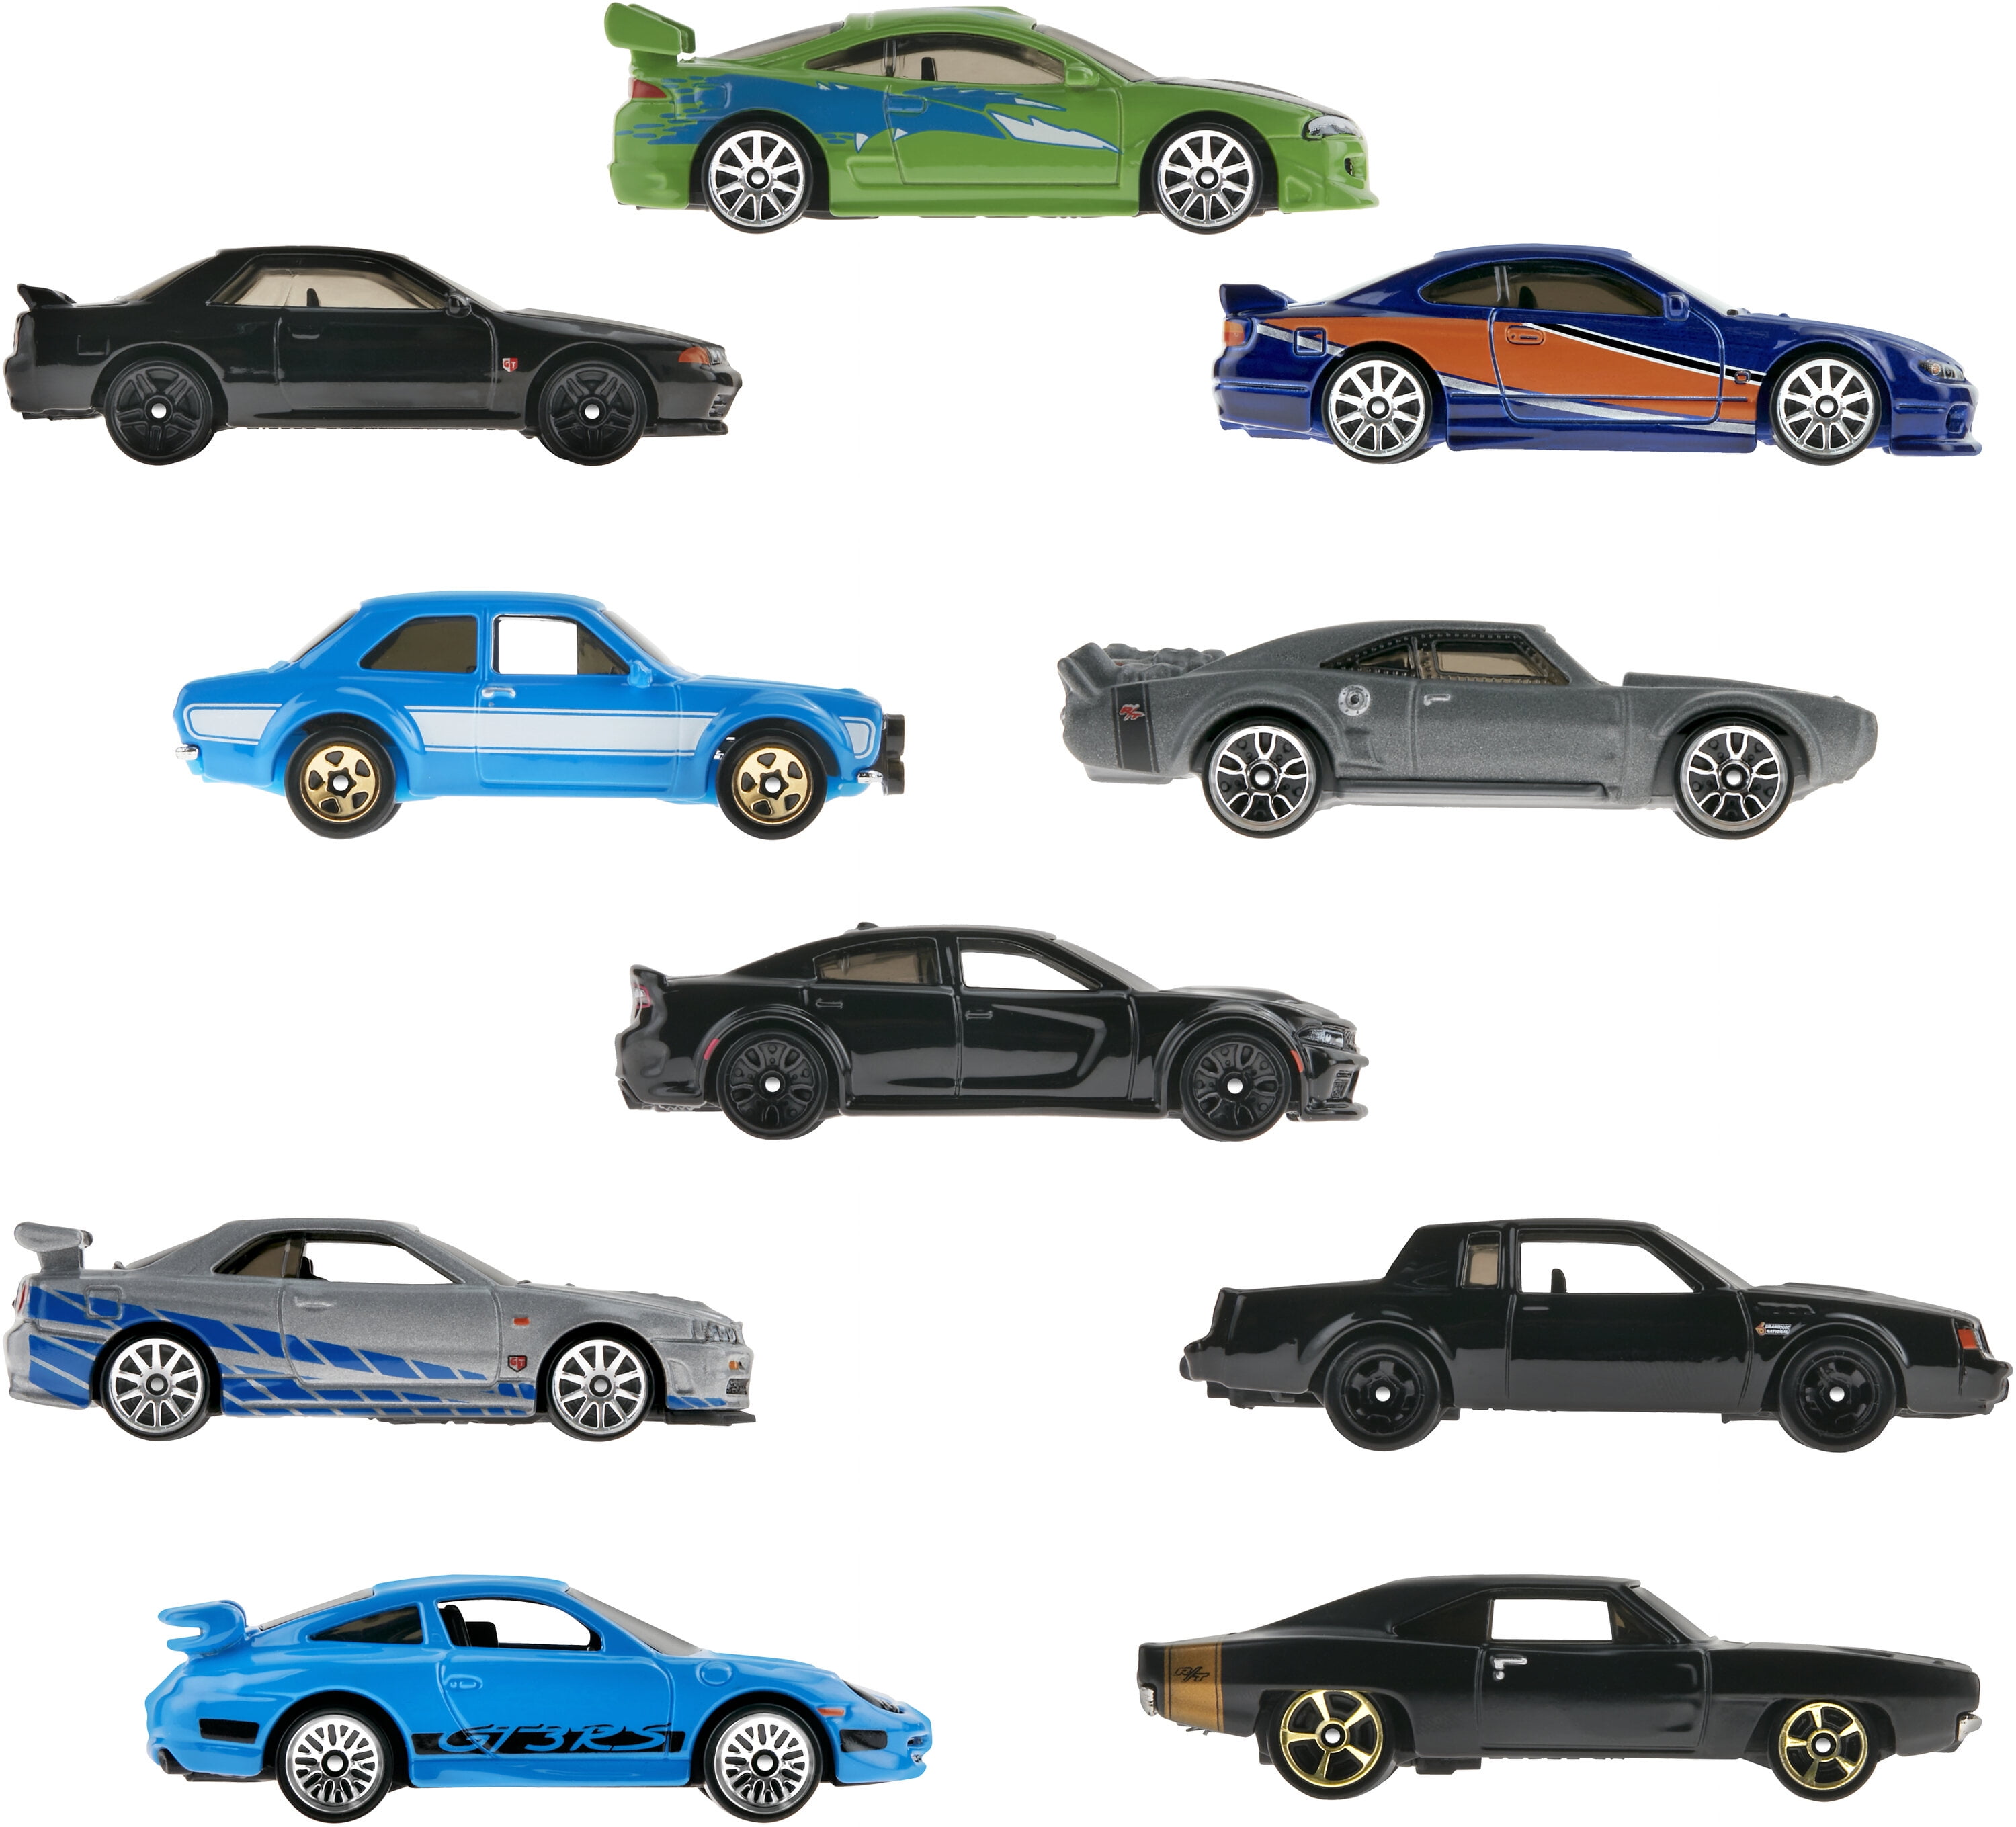  Hot Wheels Fast & Furious Prem Bundle 1 Vehicle : Toys & Games